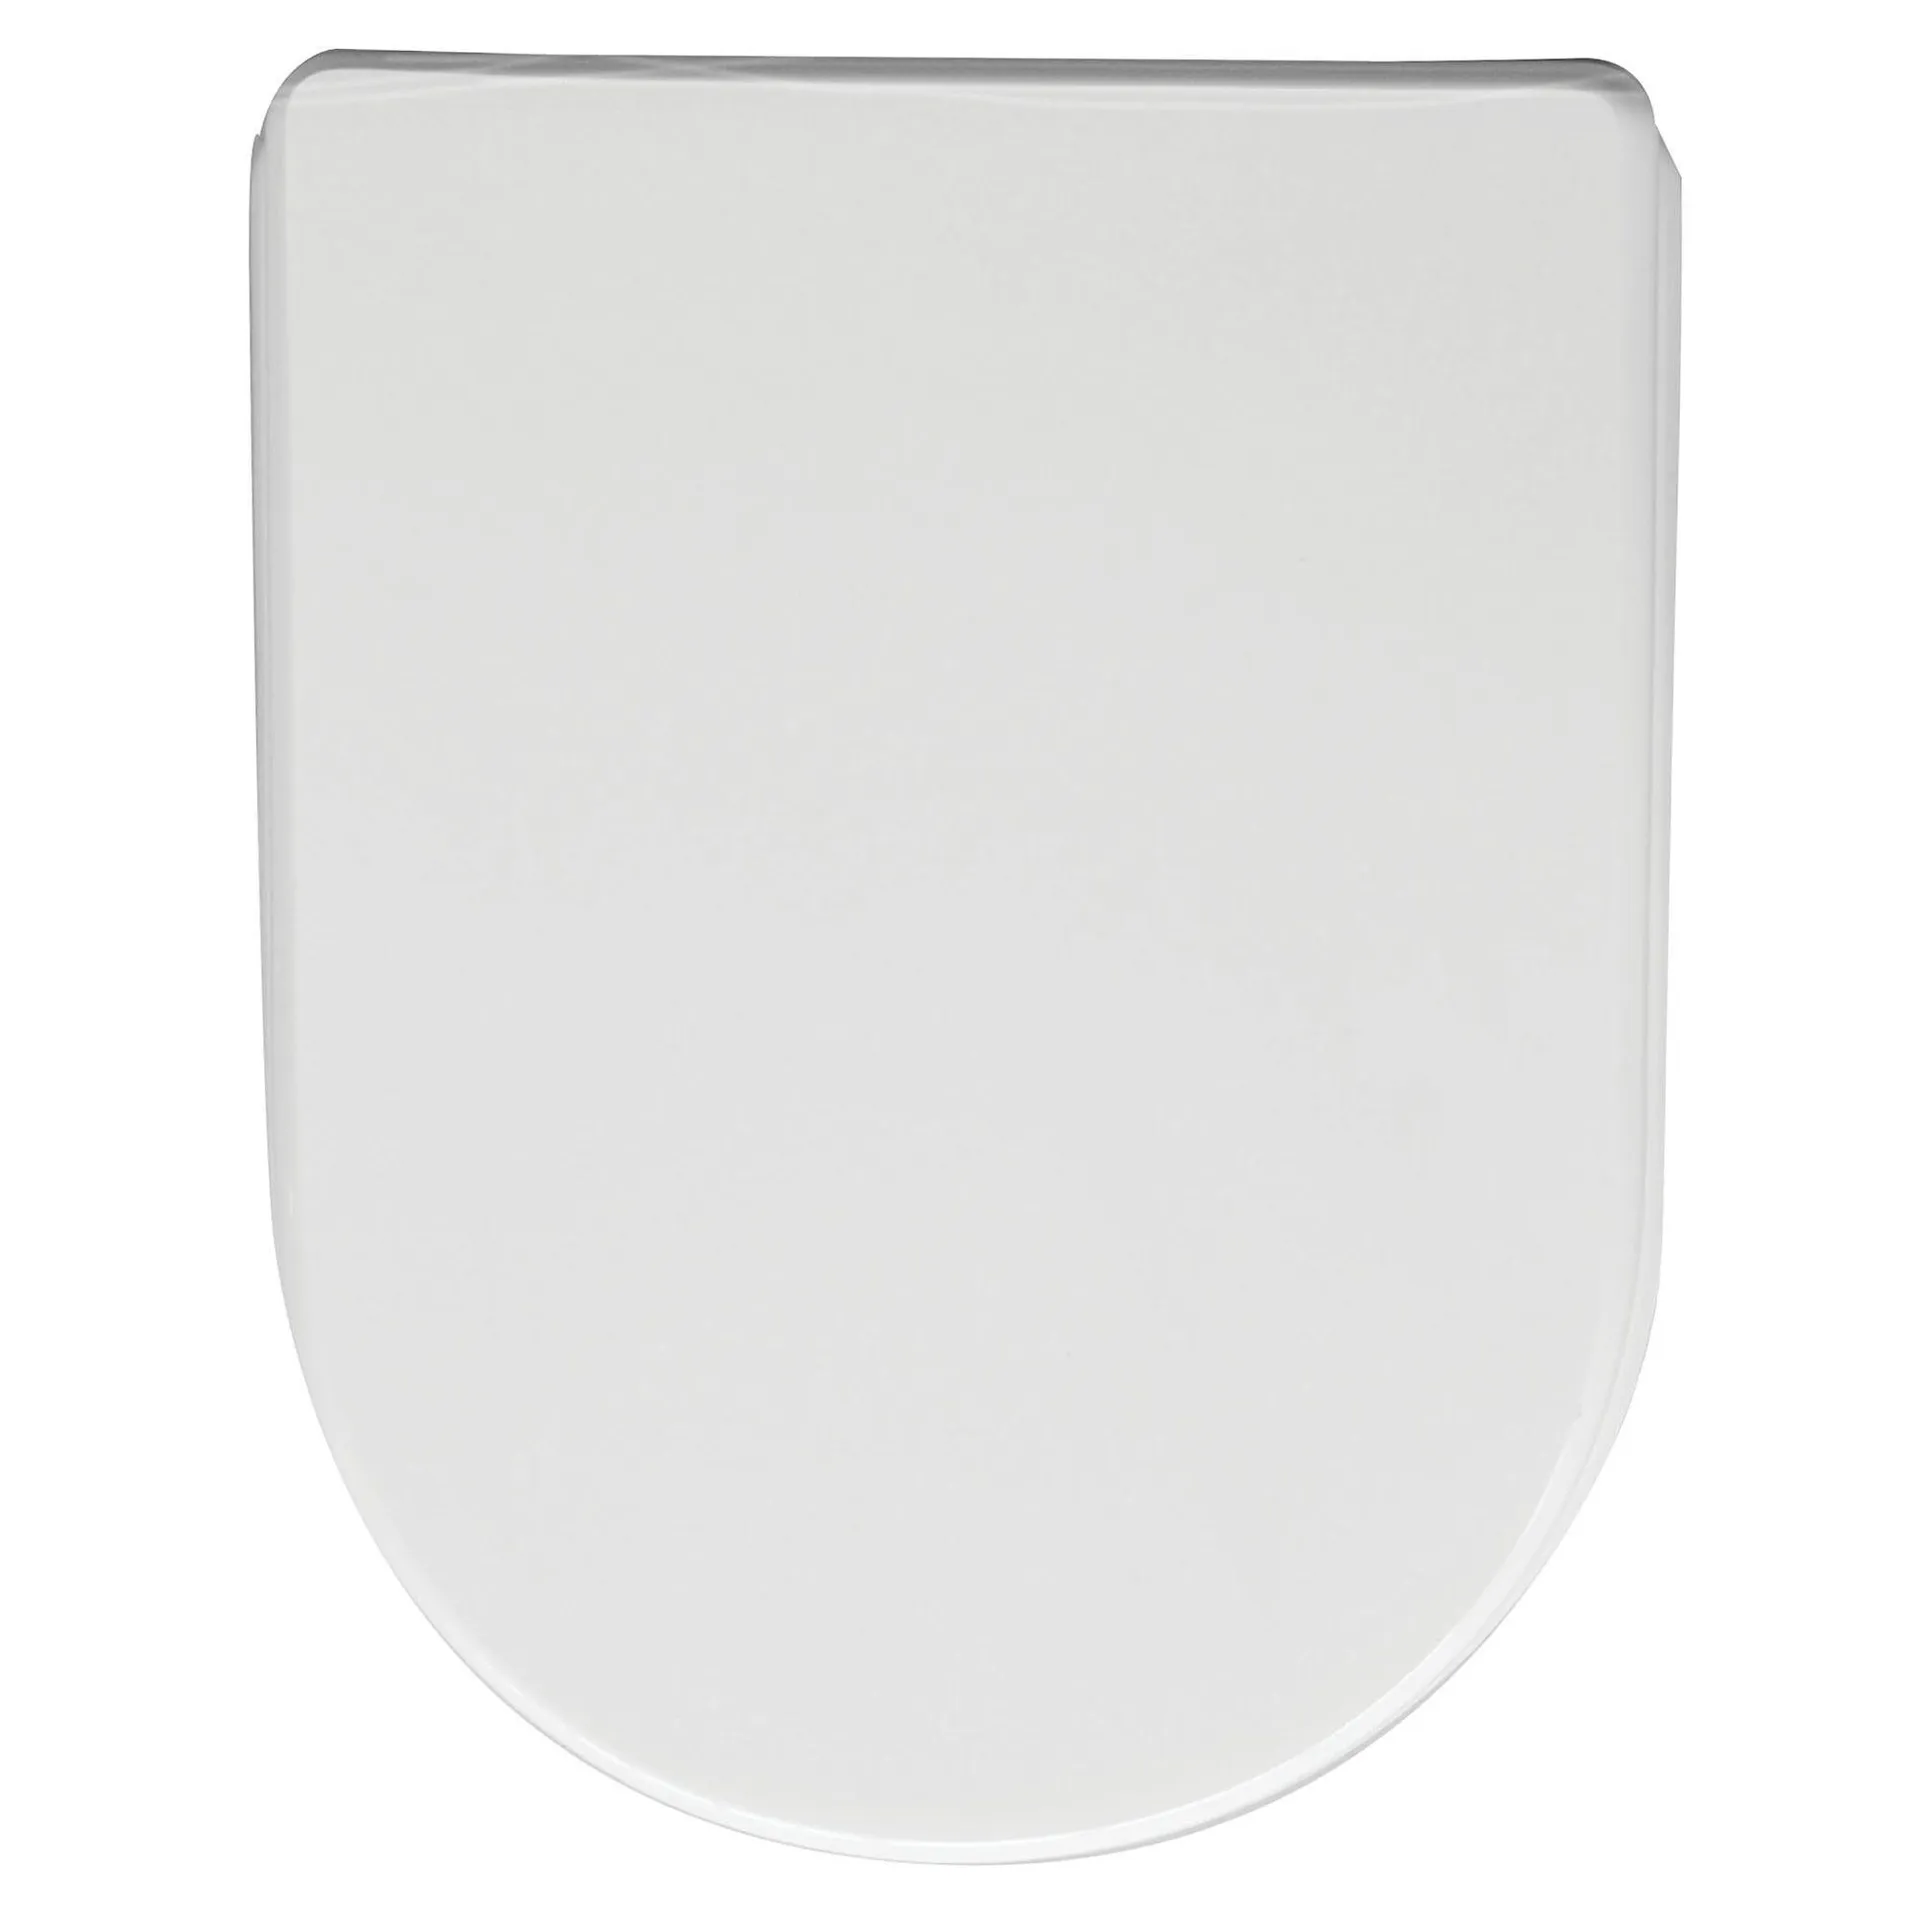 Sedile wc serie clara termoindurente bianco cerniere metallo